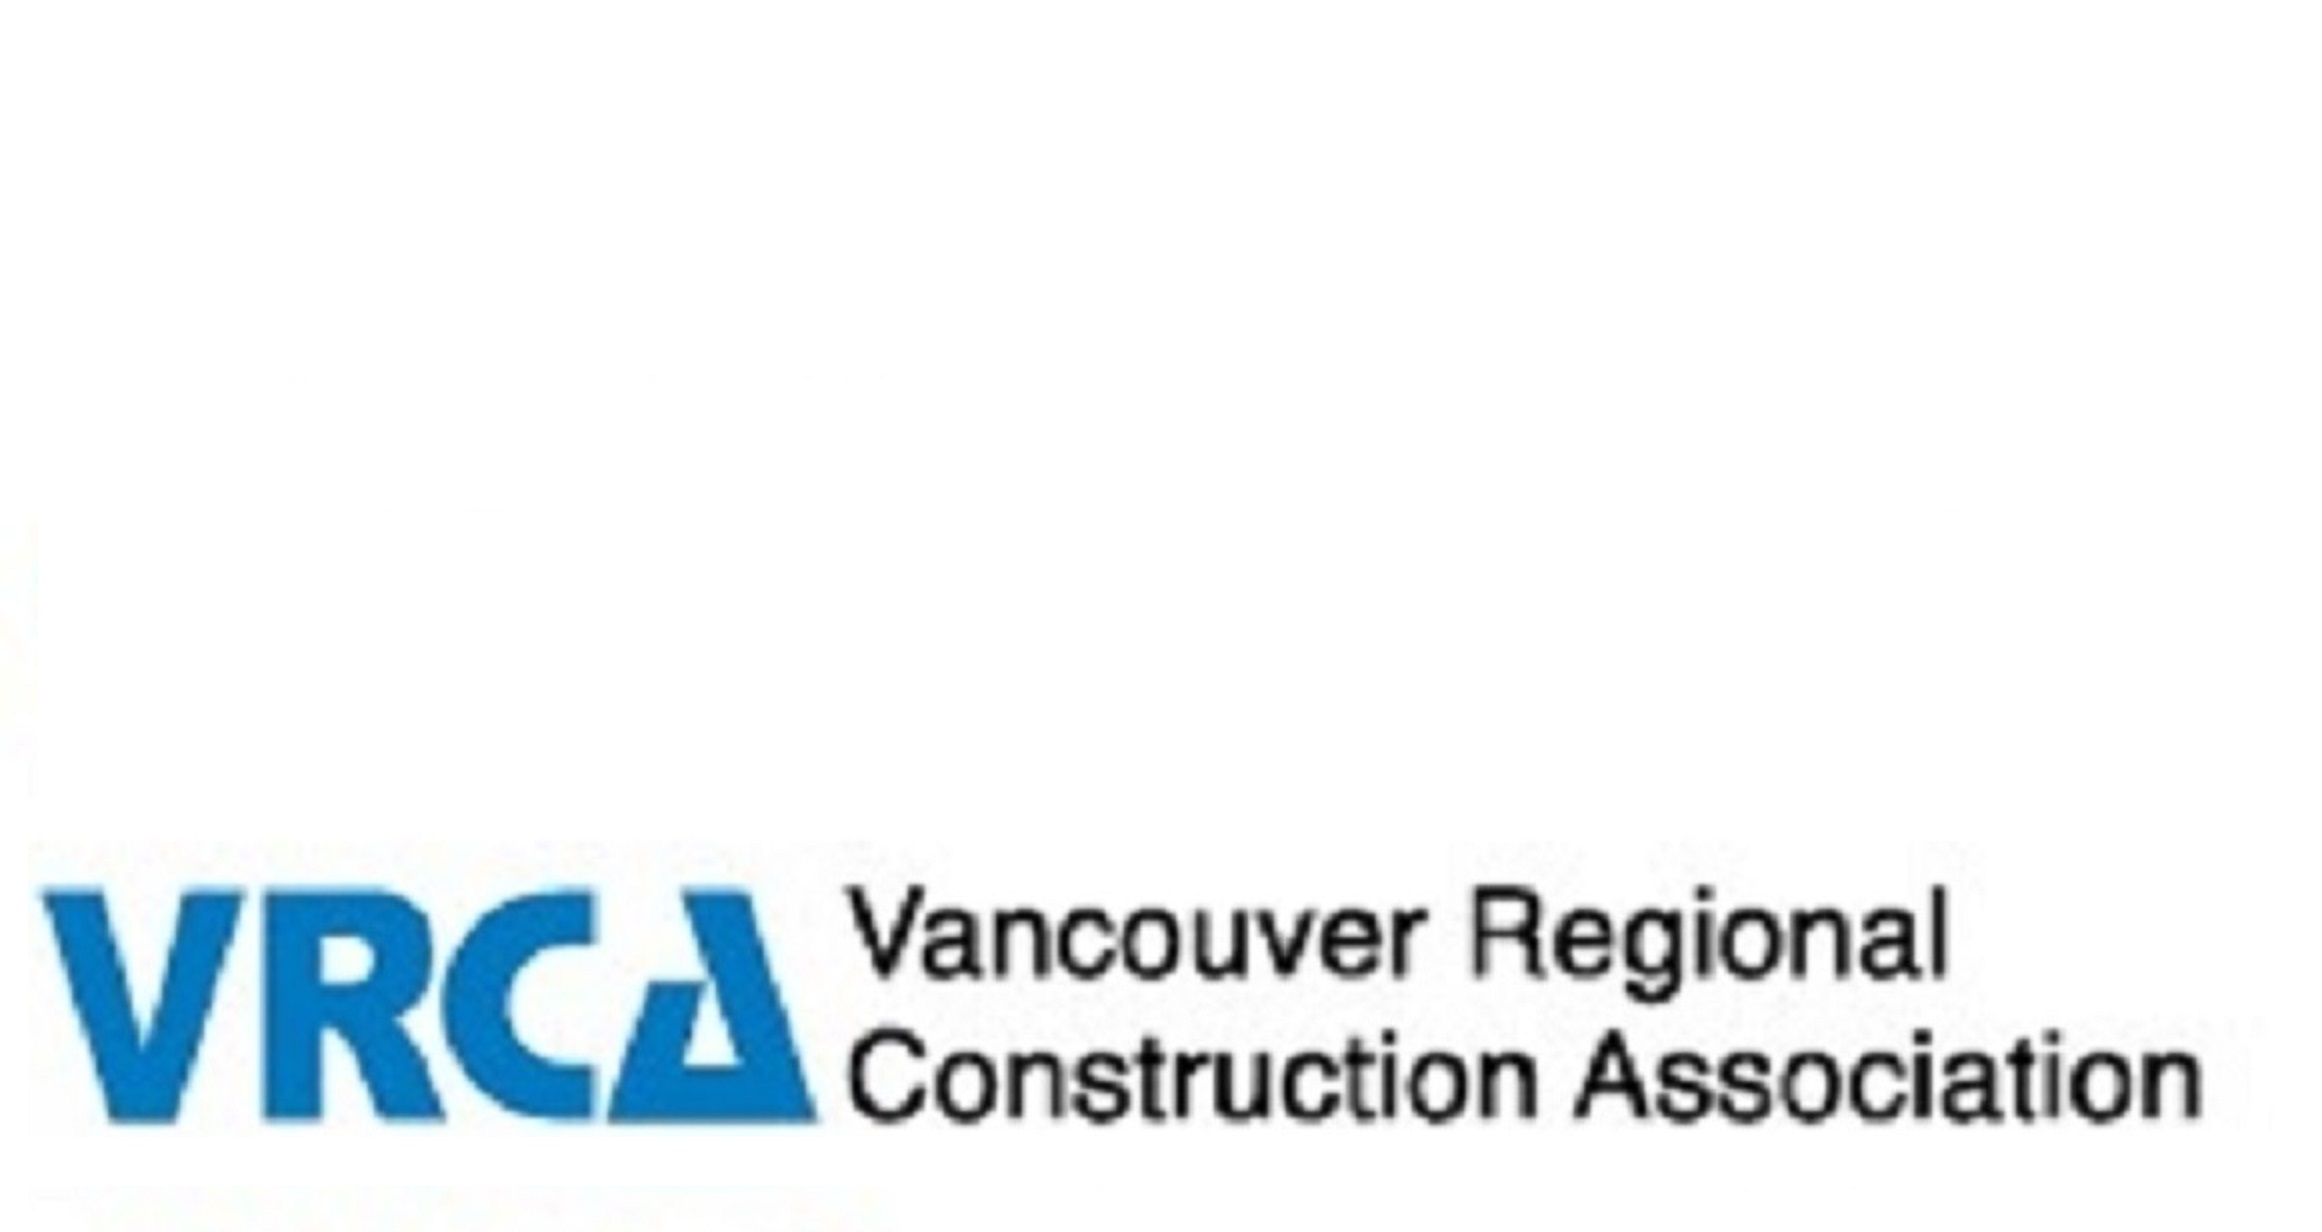 Vancouver Regional Construction Association